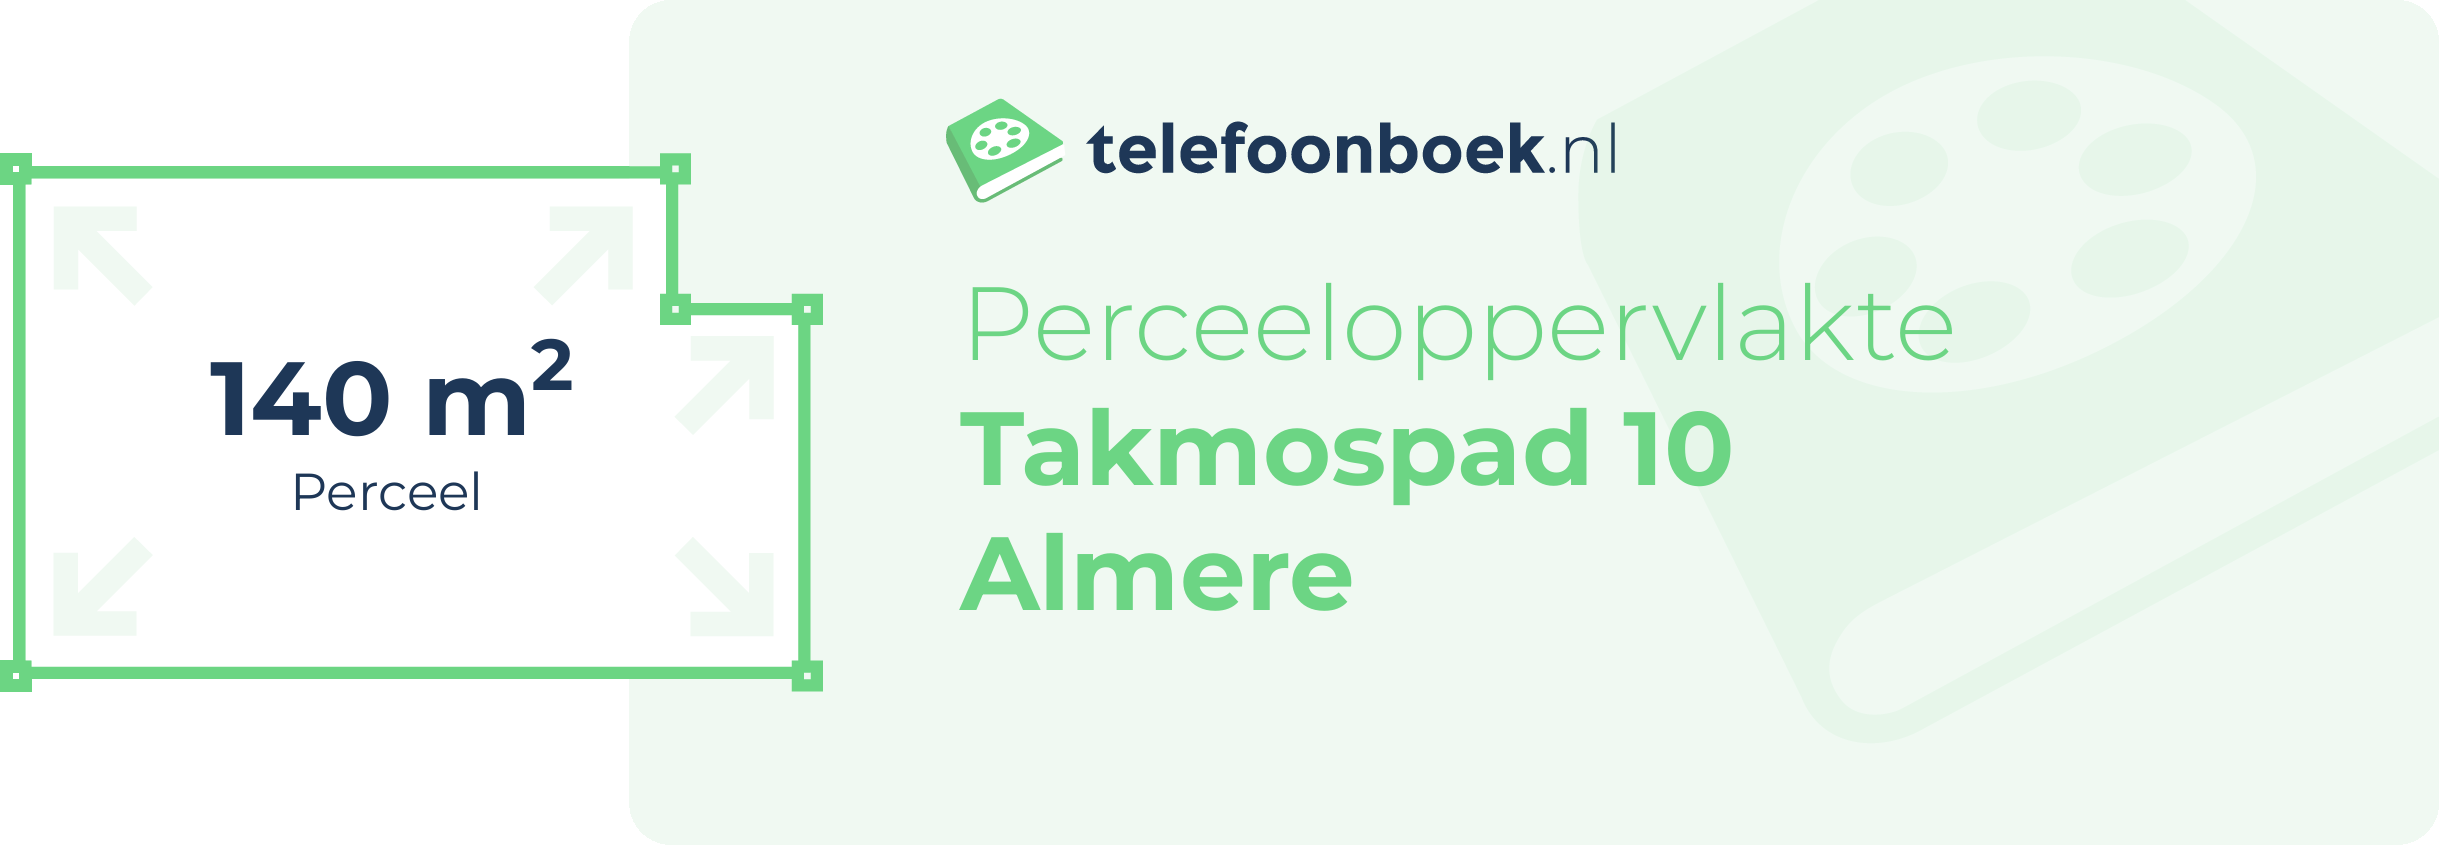 Perceeloppervlakte Takmospad 10 Almere